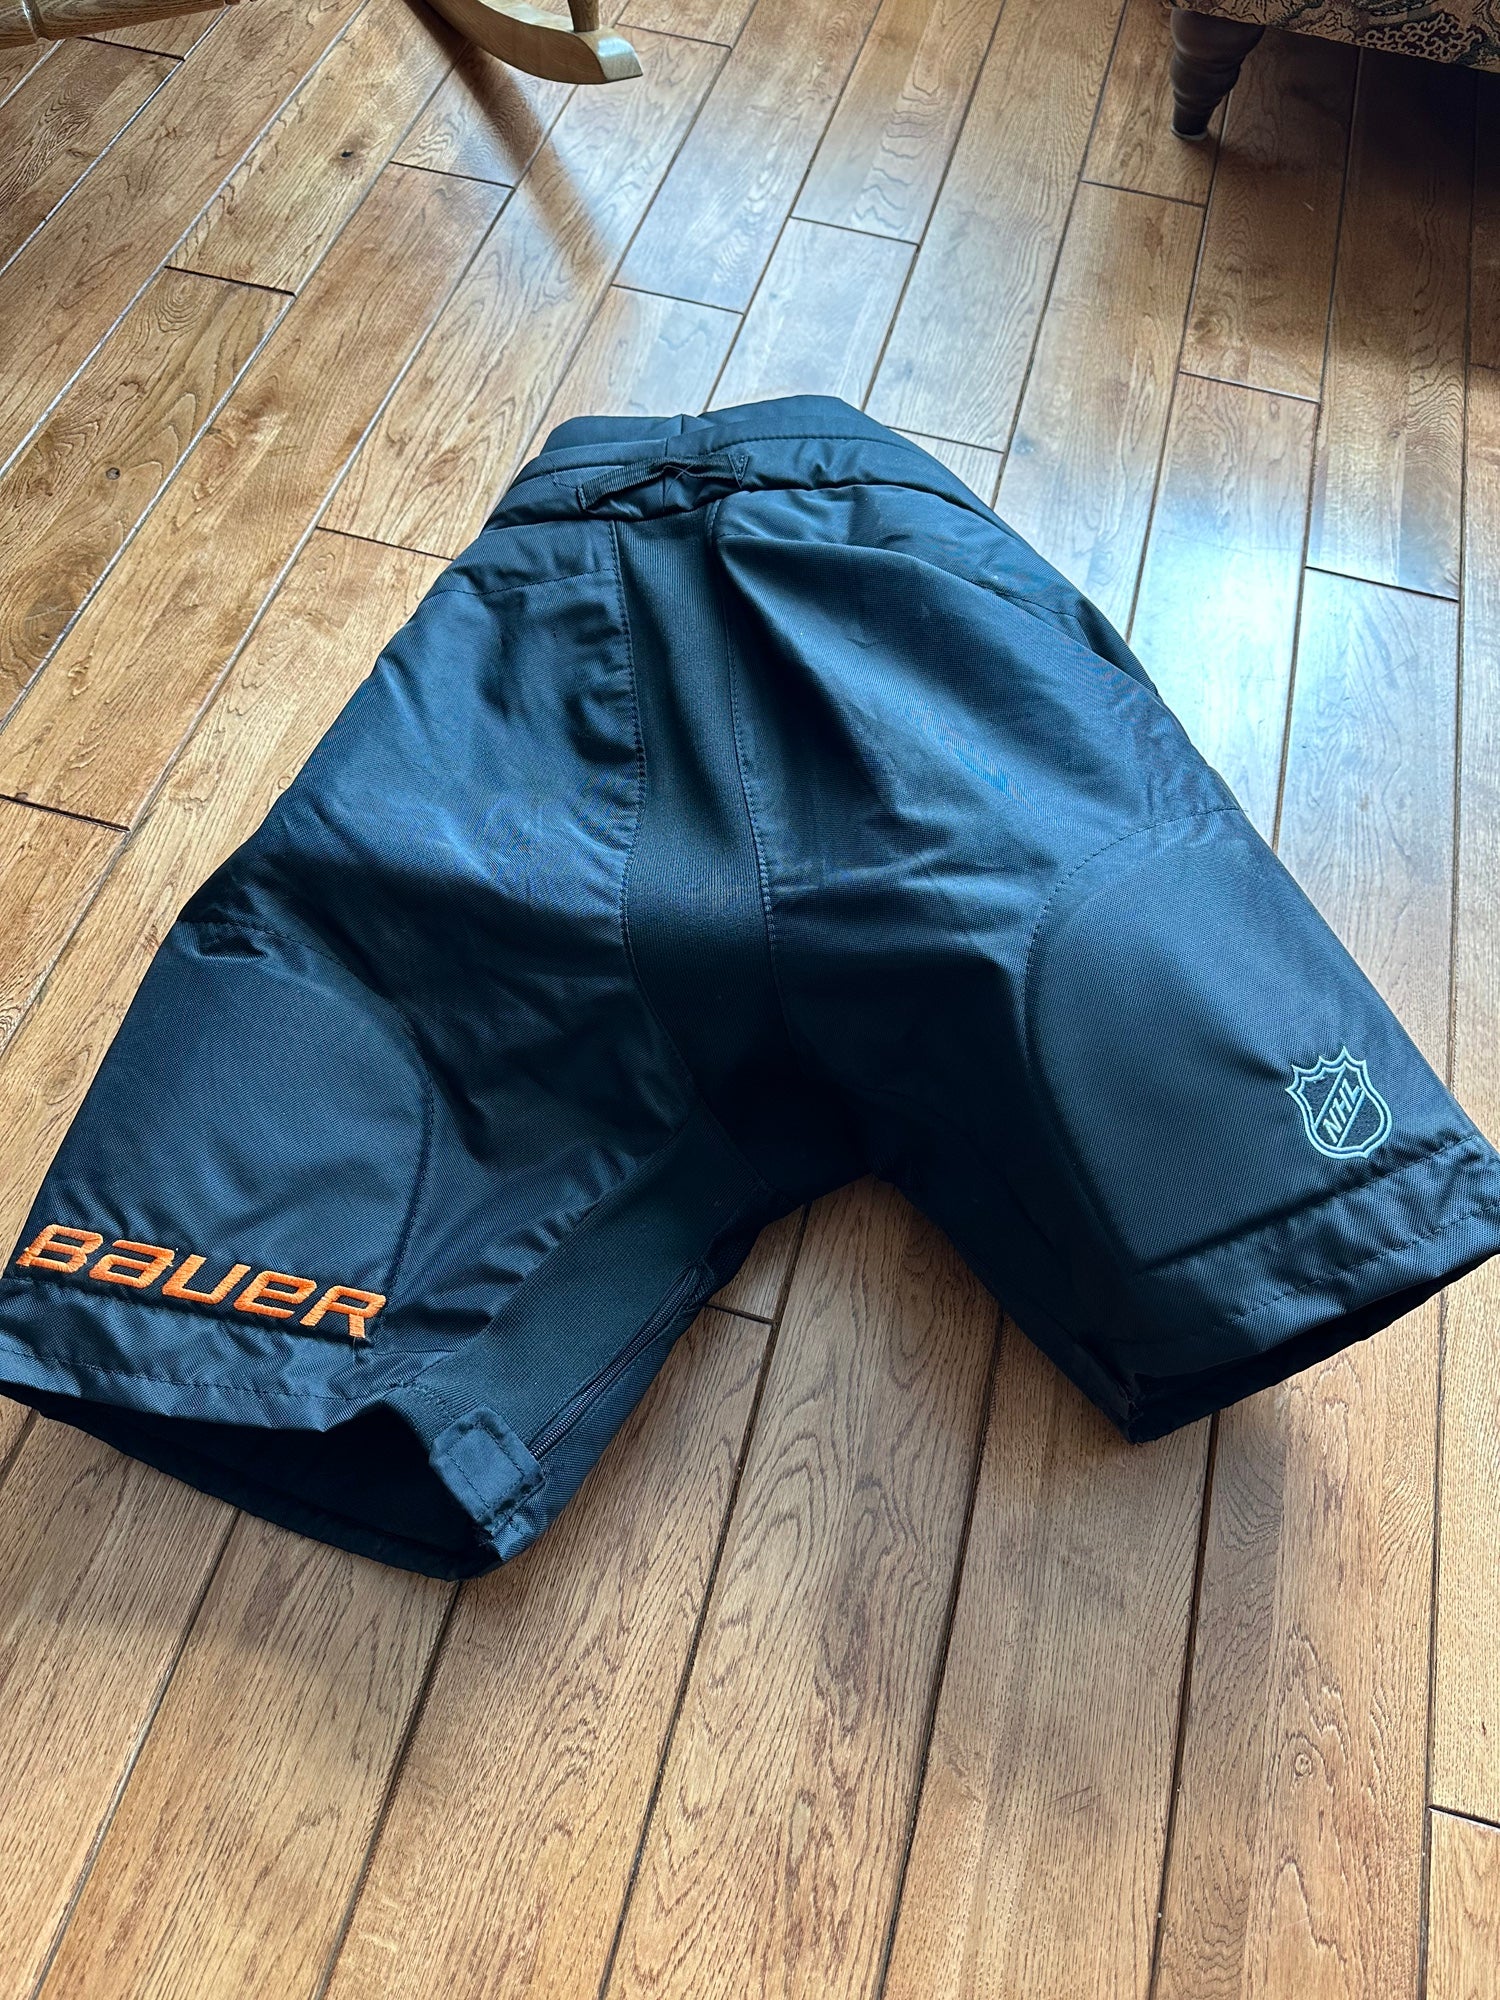 Philadelphia Flyers Large+1 Bauer Pro Stock Nexus Hockey Pants